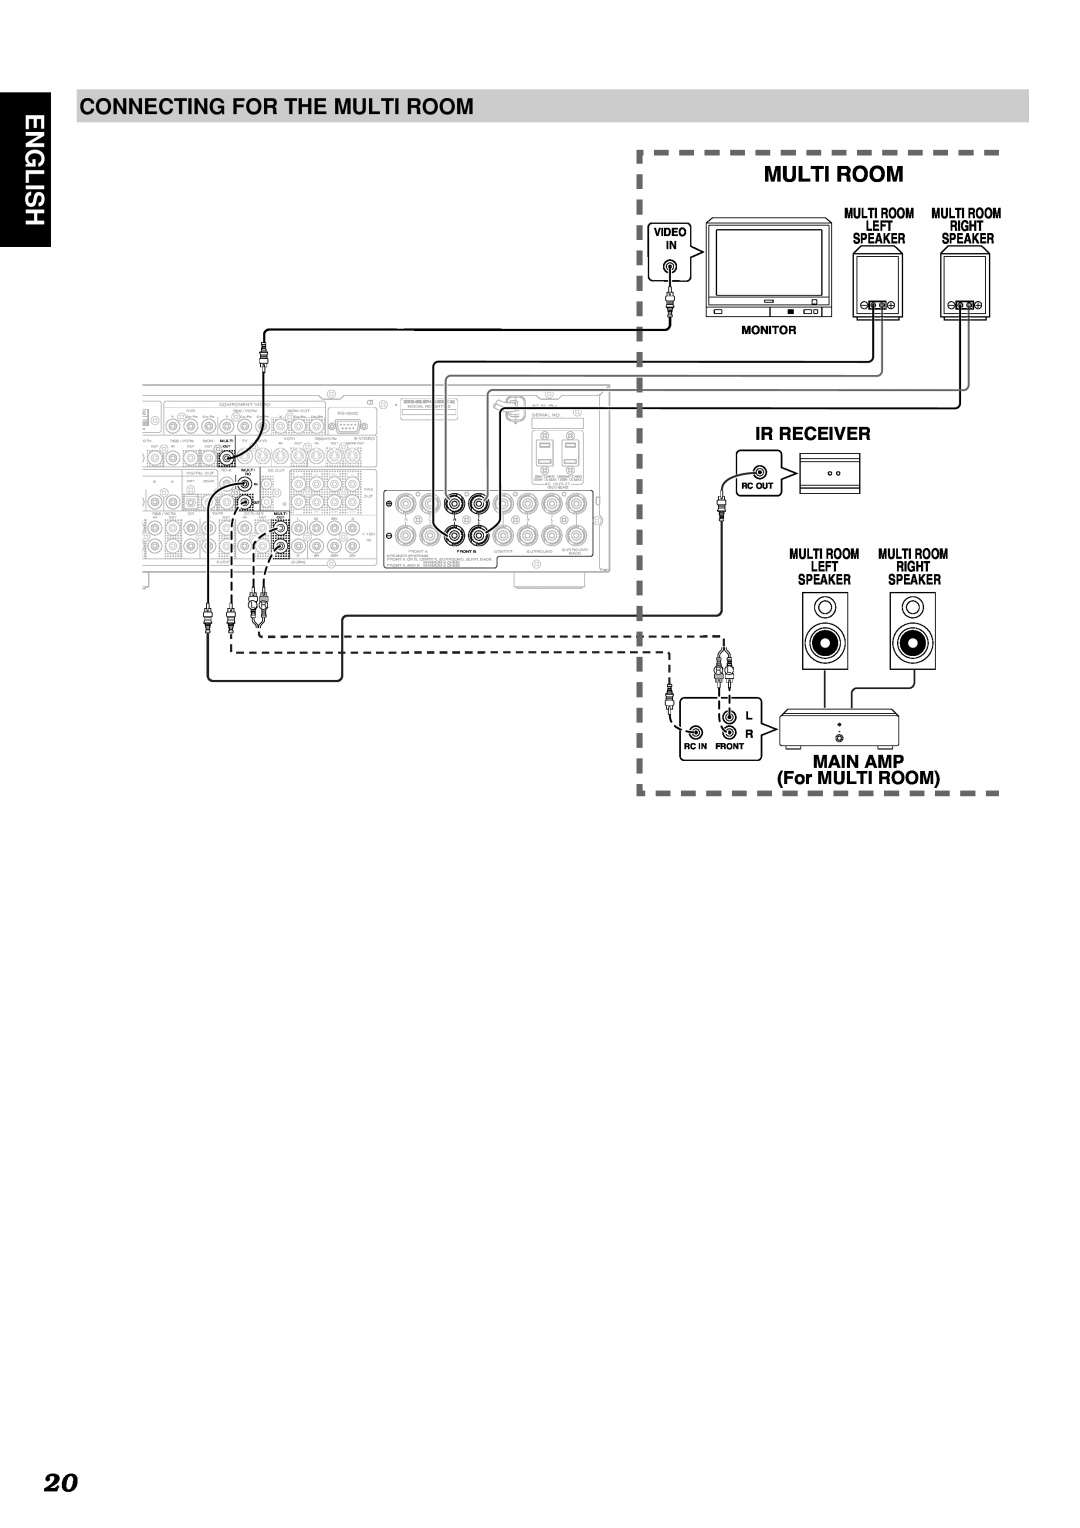 Marantz SR7300 English, Ir Receiver, MAIN AMP For MULTI ROOM, Monitor, Multi Room, Left, Right, Speaker, Rc Out, Lr R L 